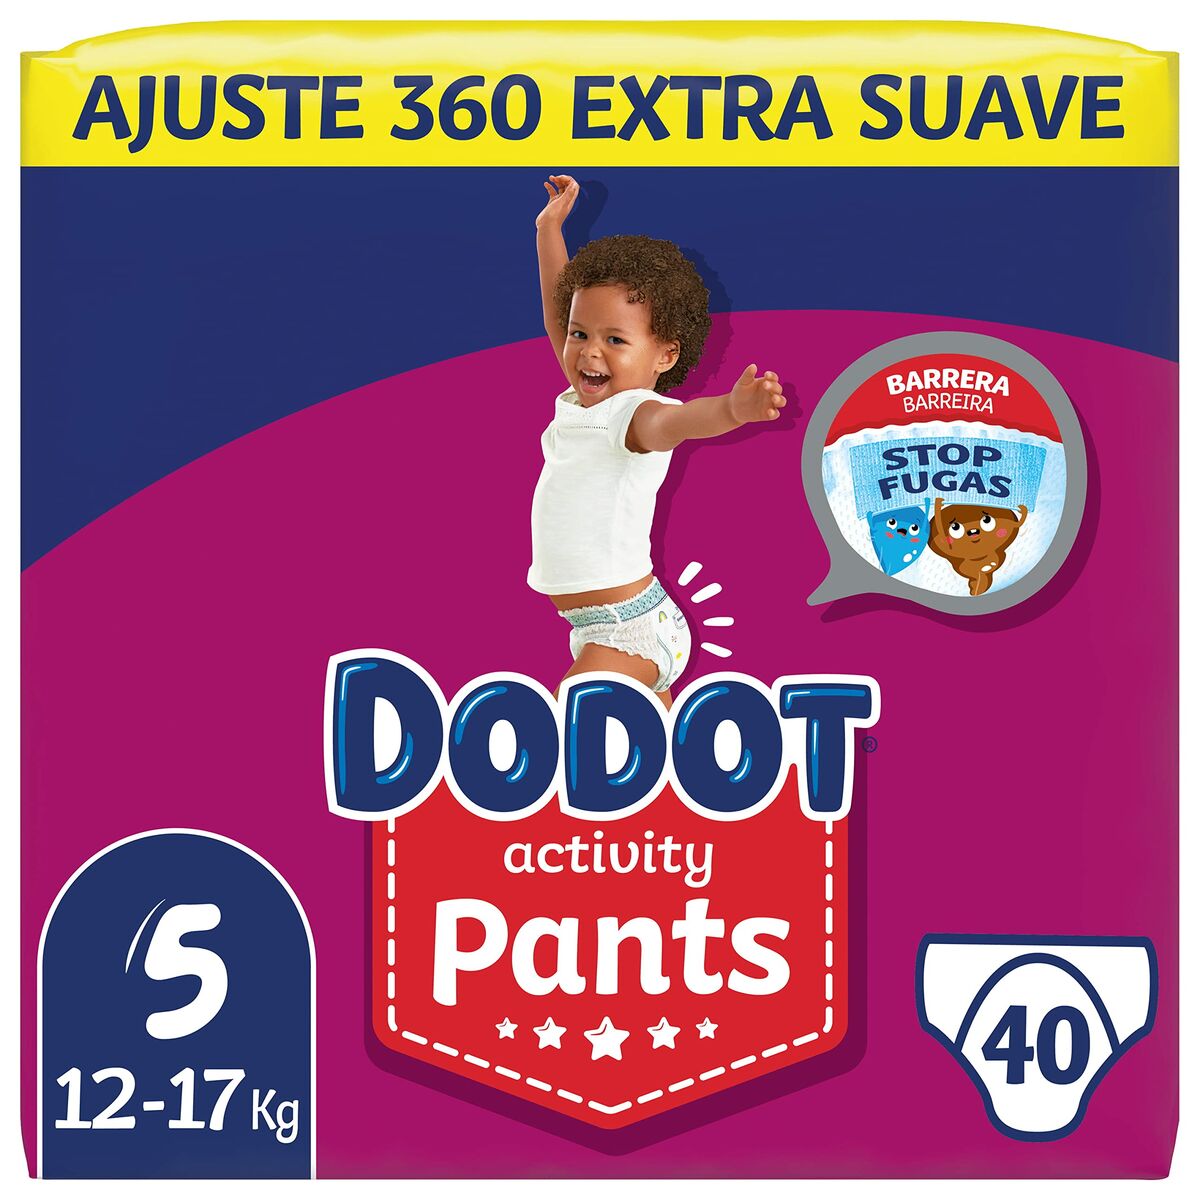 Dodot Pants talla 4 (9-15 kg) (3 x 33 uds.) desde 27,59 €